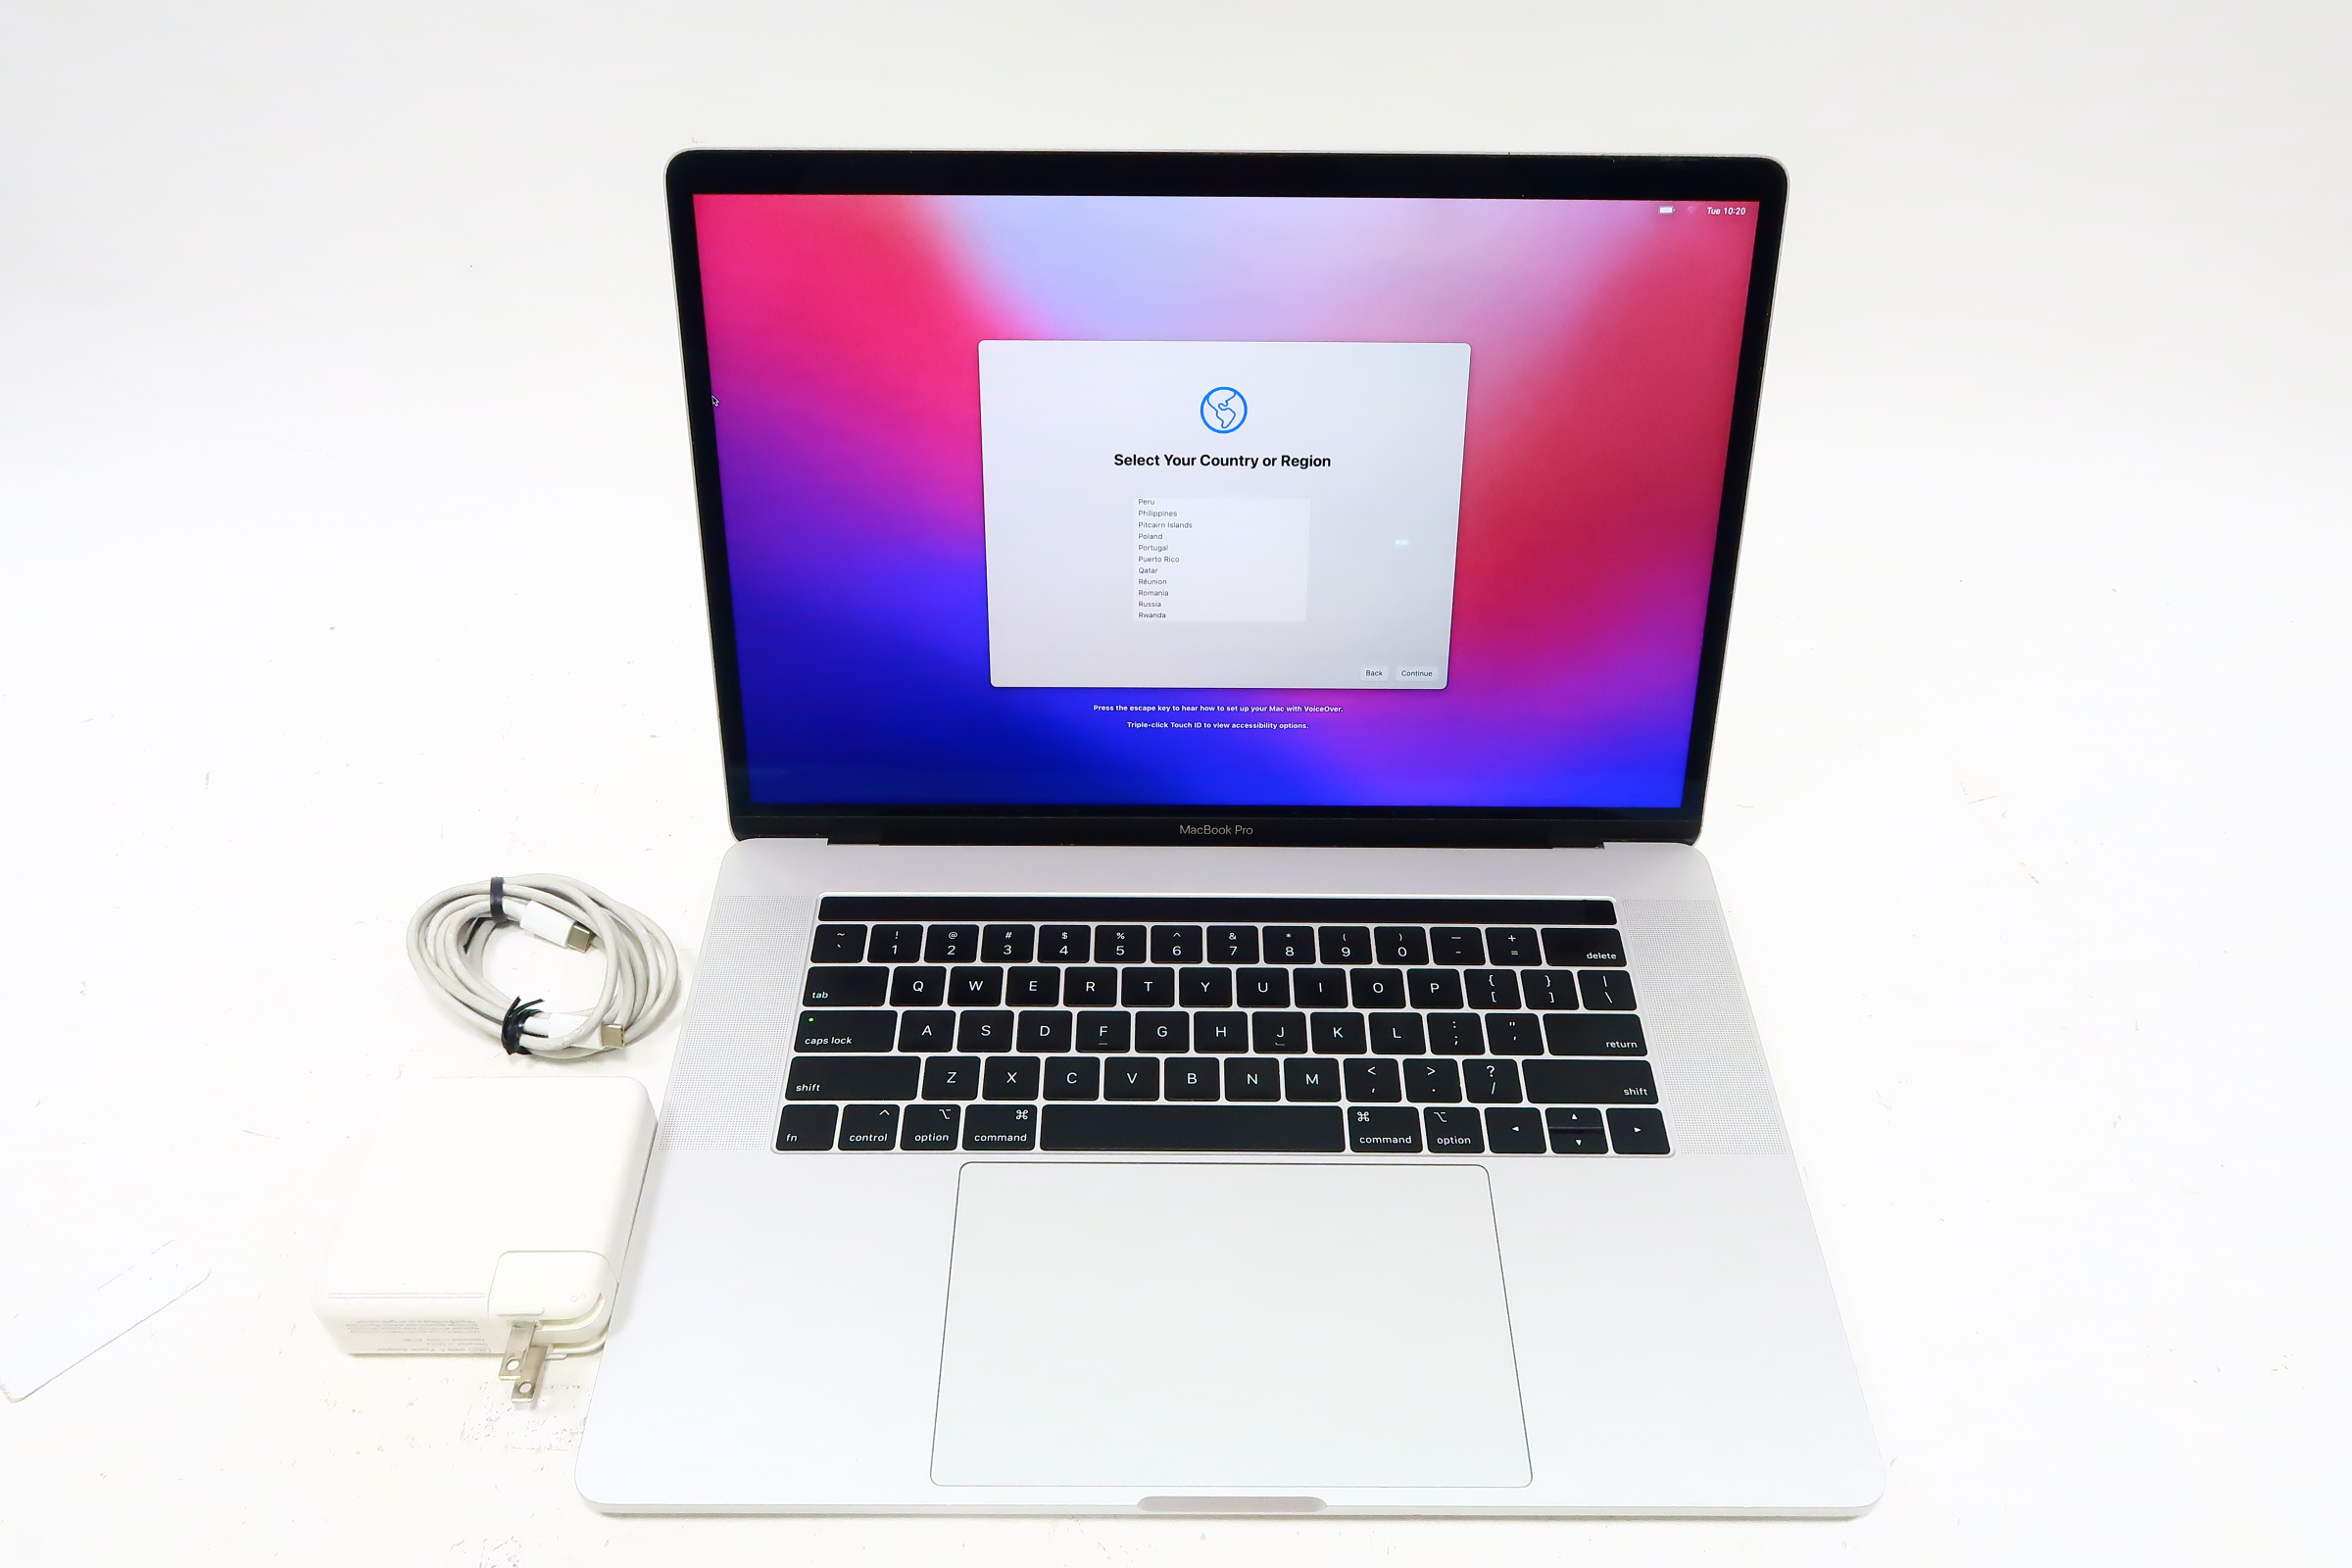 Apple MacBook Pro 2015, 15.4, 2.2 GHz, 16 GB, 128 GB SSD